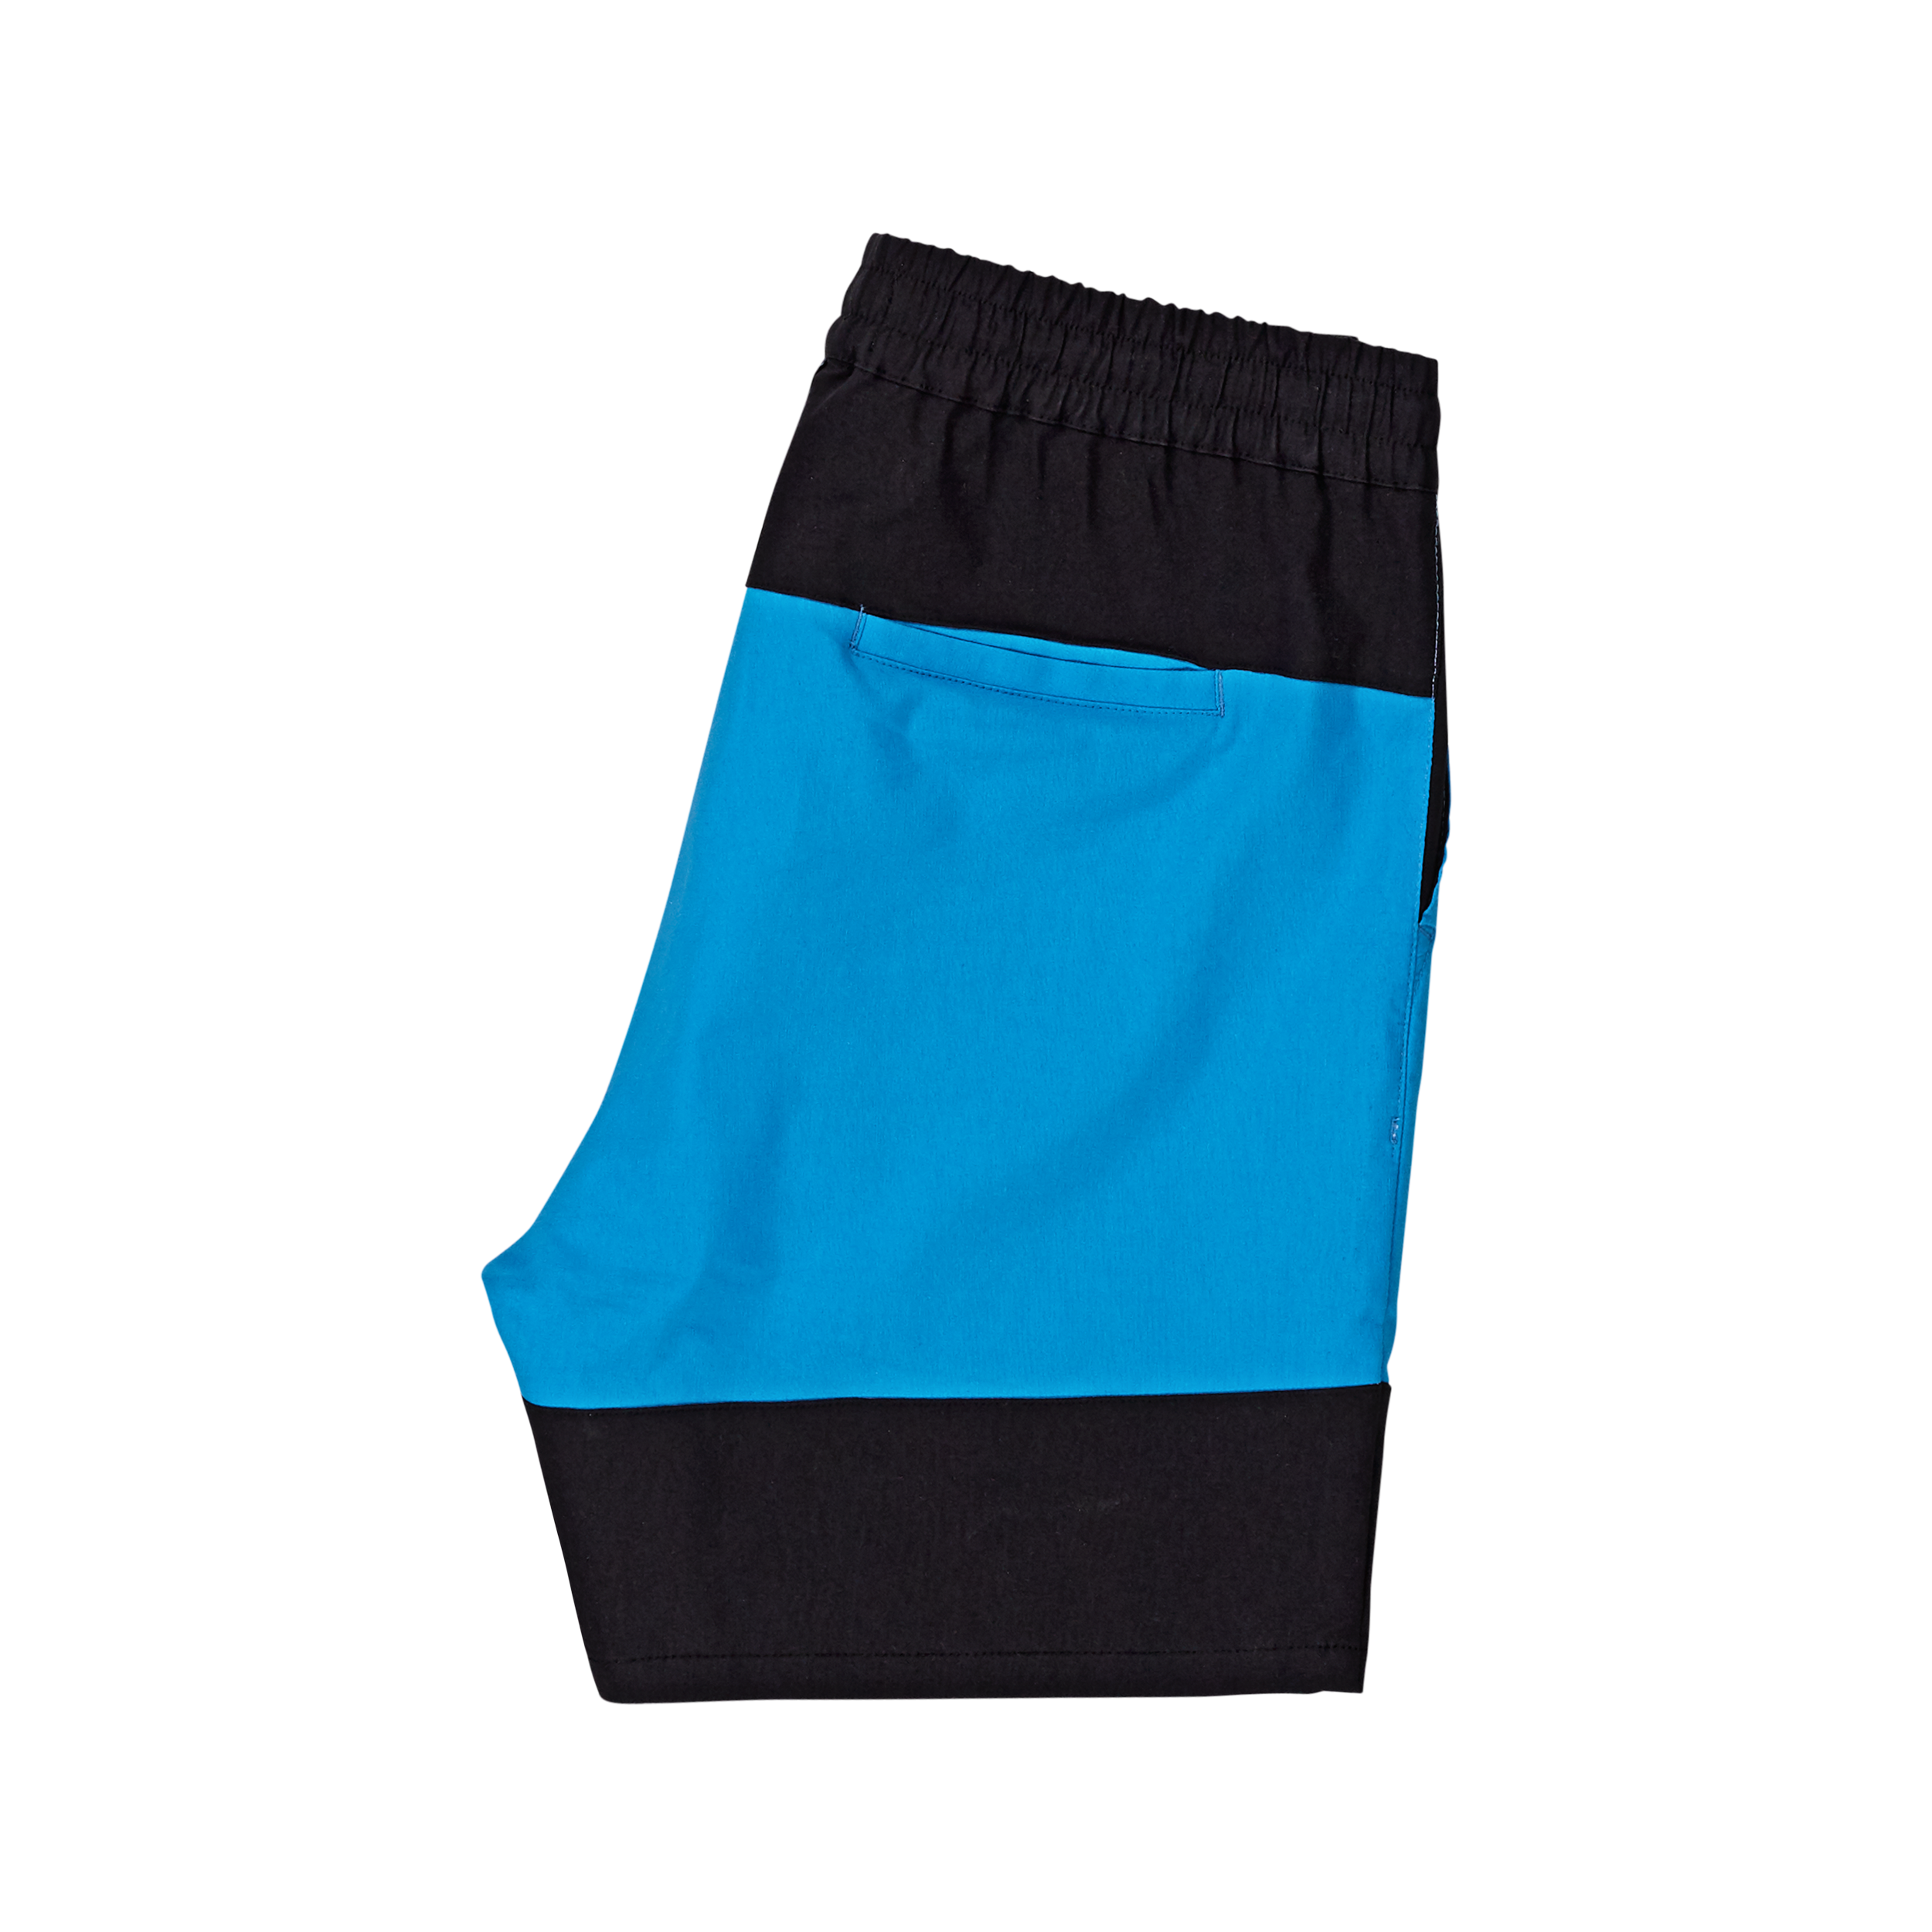 Wolax Hybrid Shorts